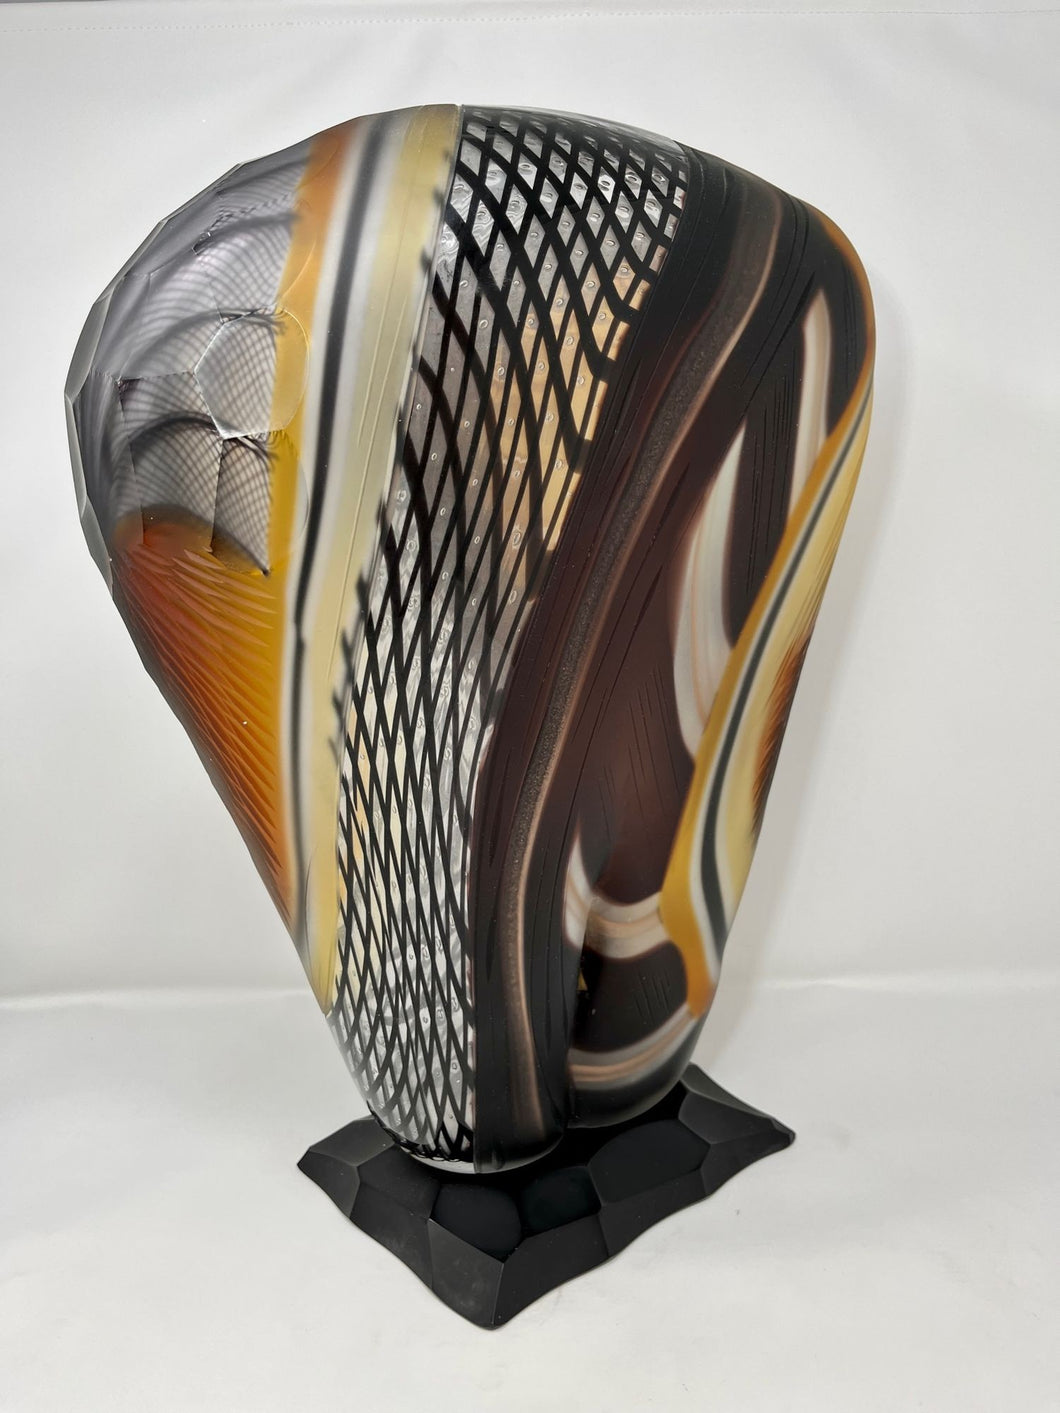 Murano Glass Vase by Schiavon Art Team